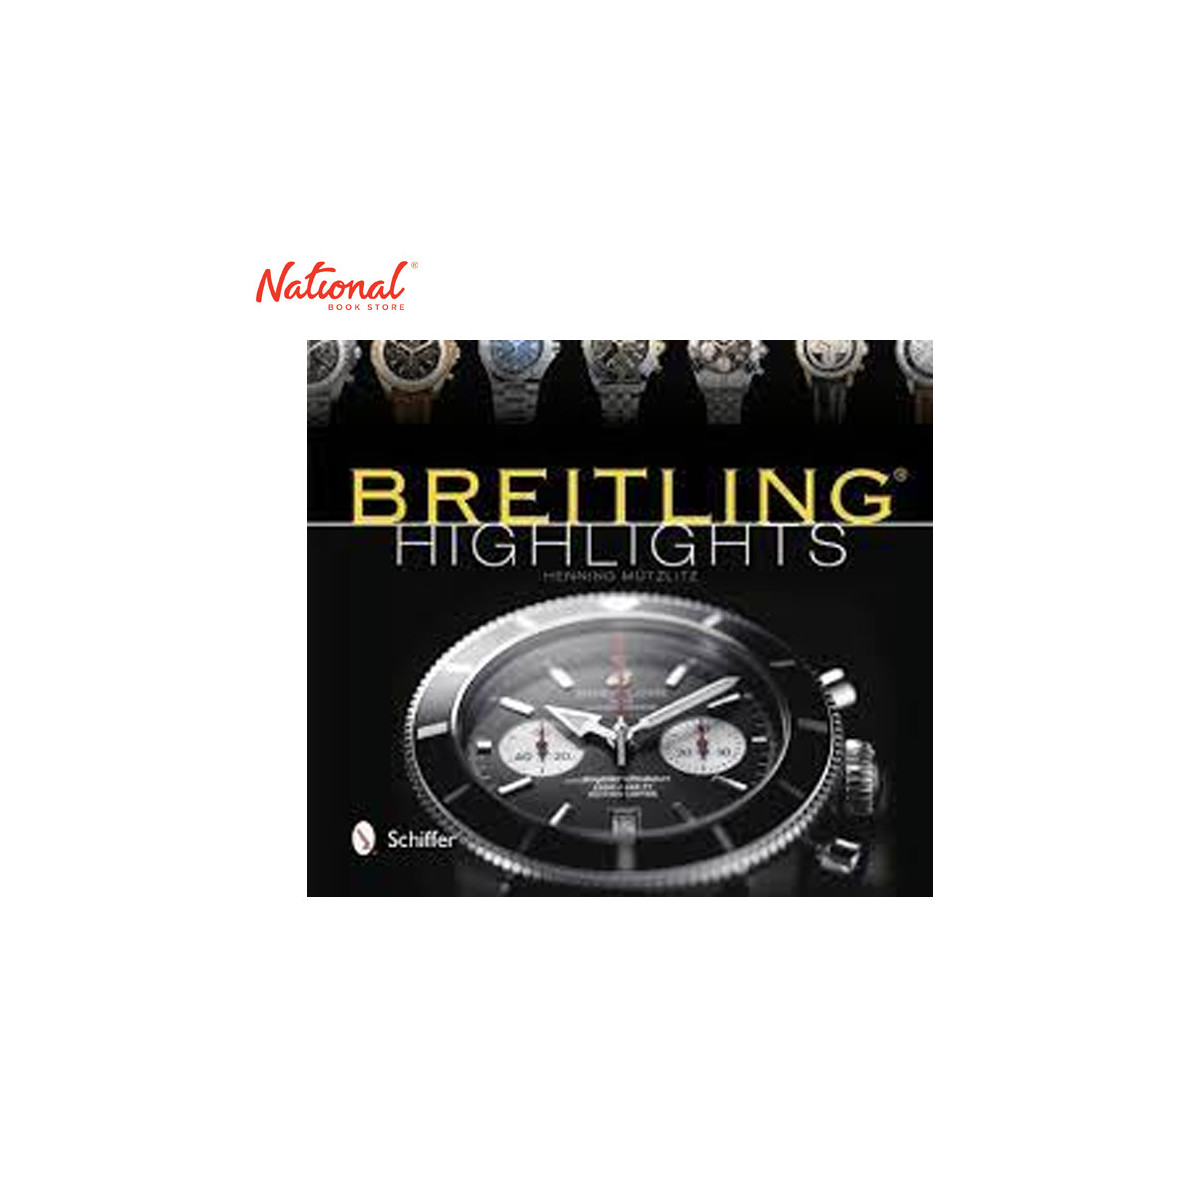 Breitling Highlights Hardcover by Henning Mutzlitz